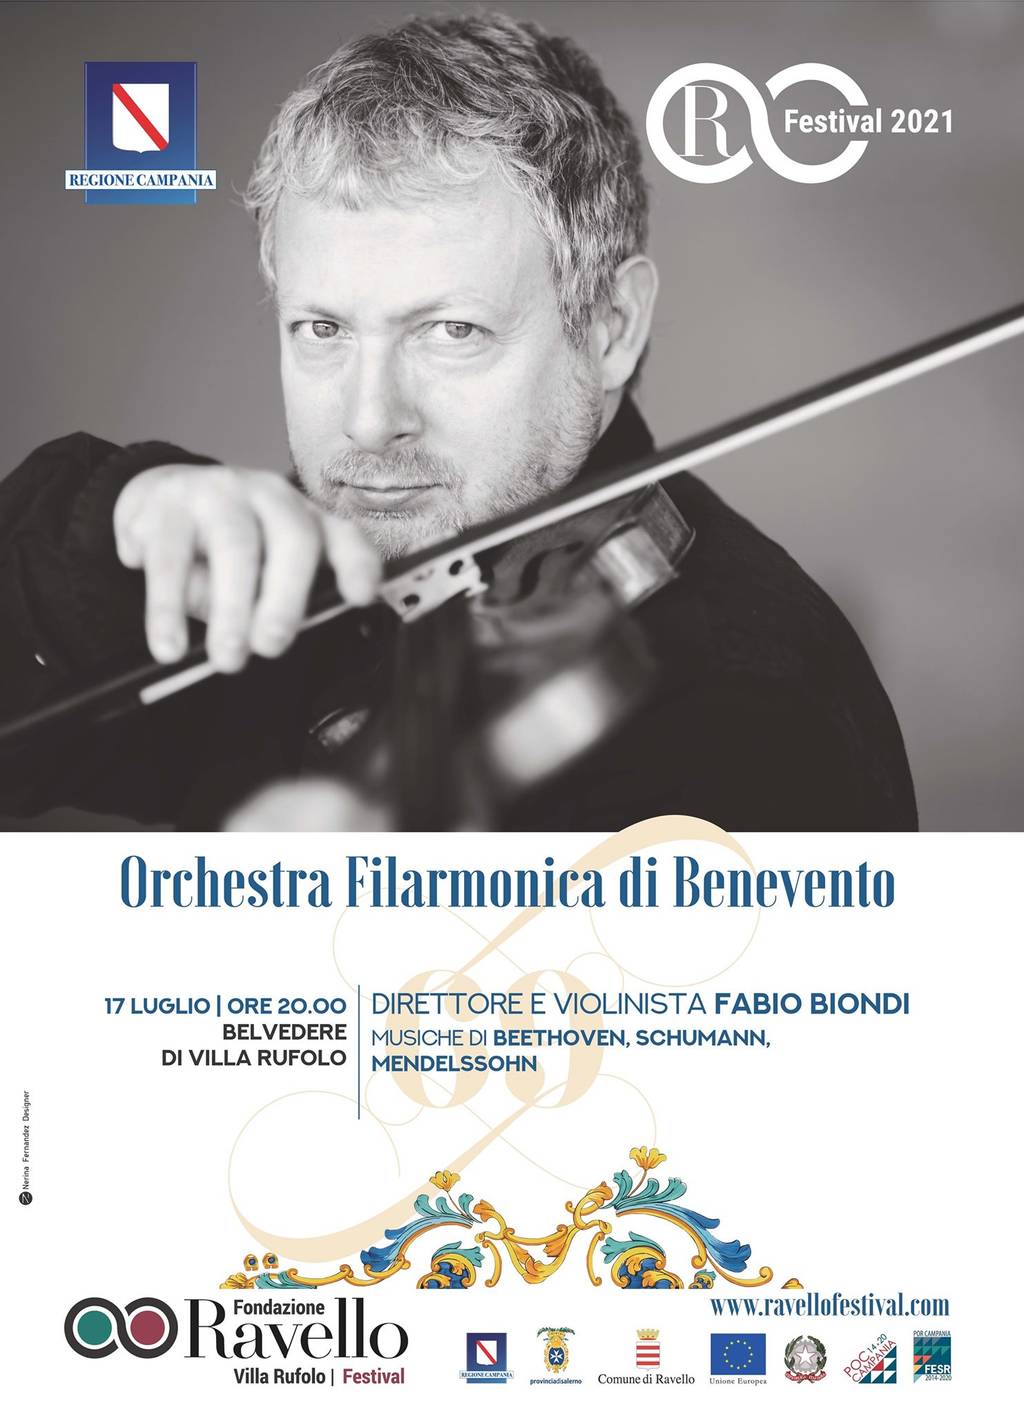 Philharmonic Orchestra of Benevento